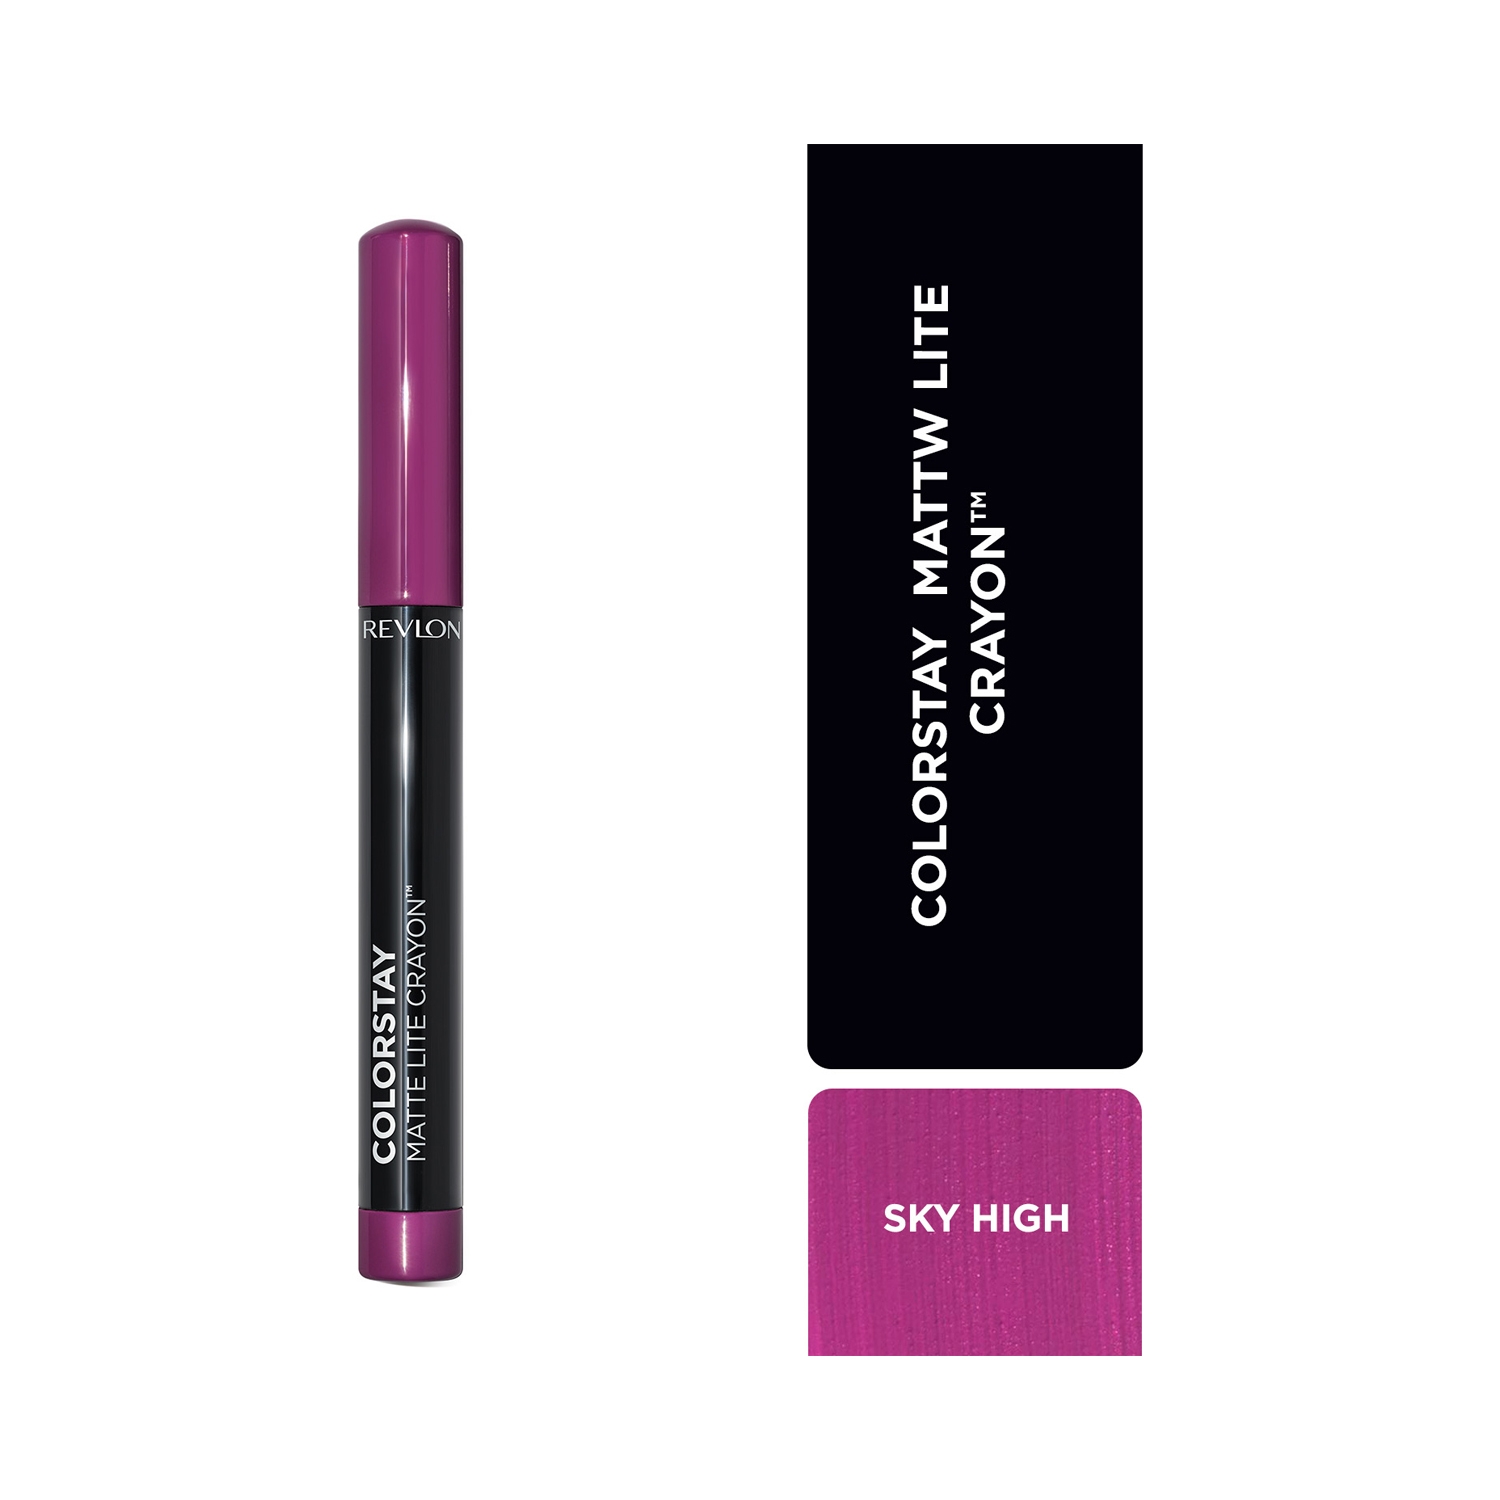 Revlon Colorstay Matte Lite Crayon - Sky High (1.4g)